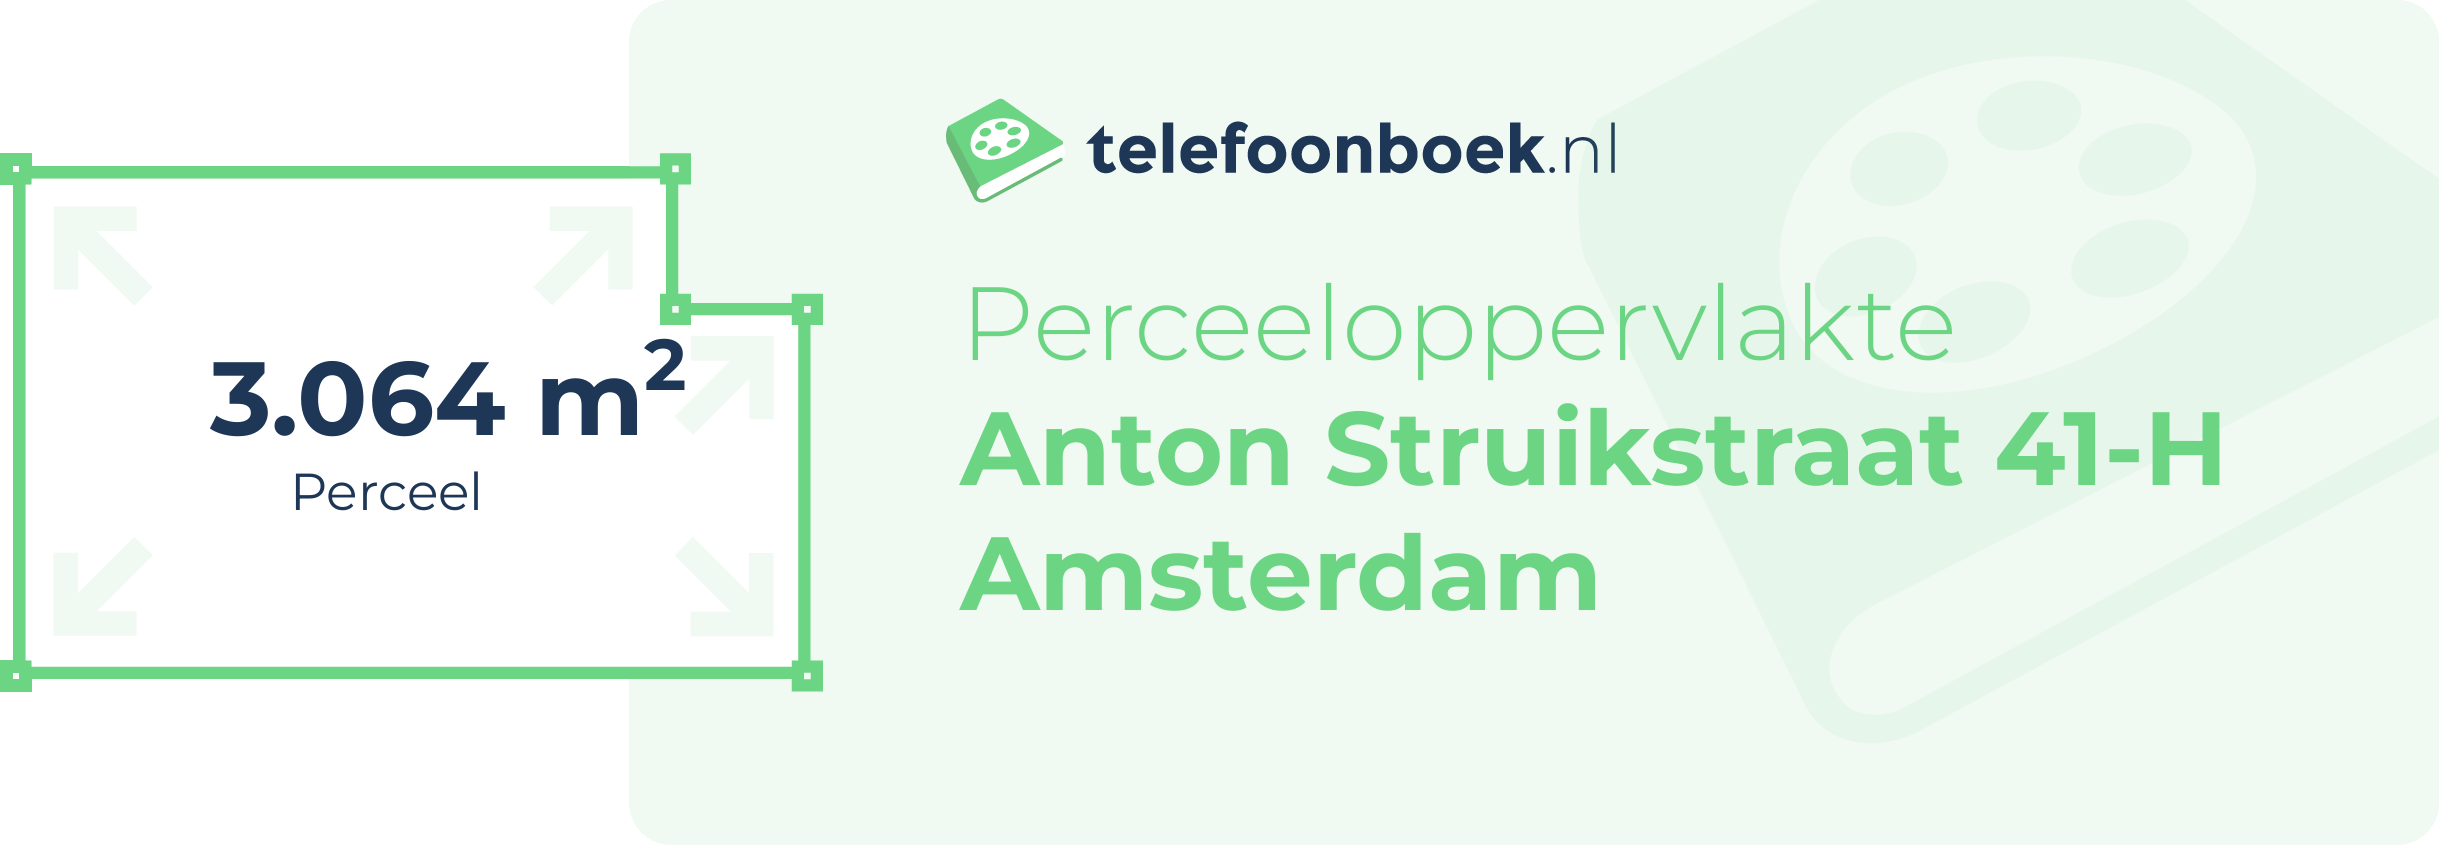 Perceeloppervlakte Anton Struikstraat 41-H Amsterdam